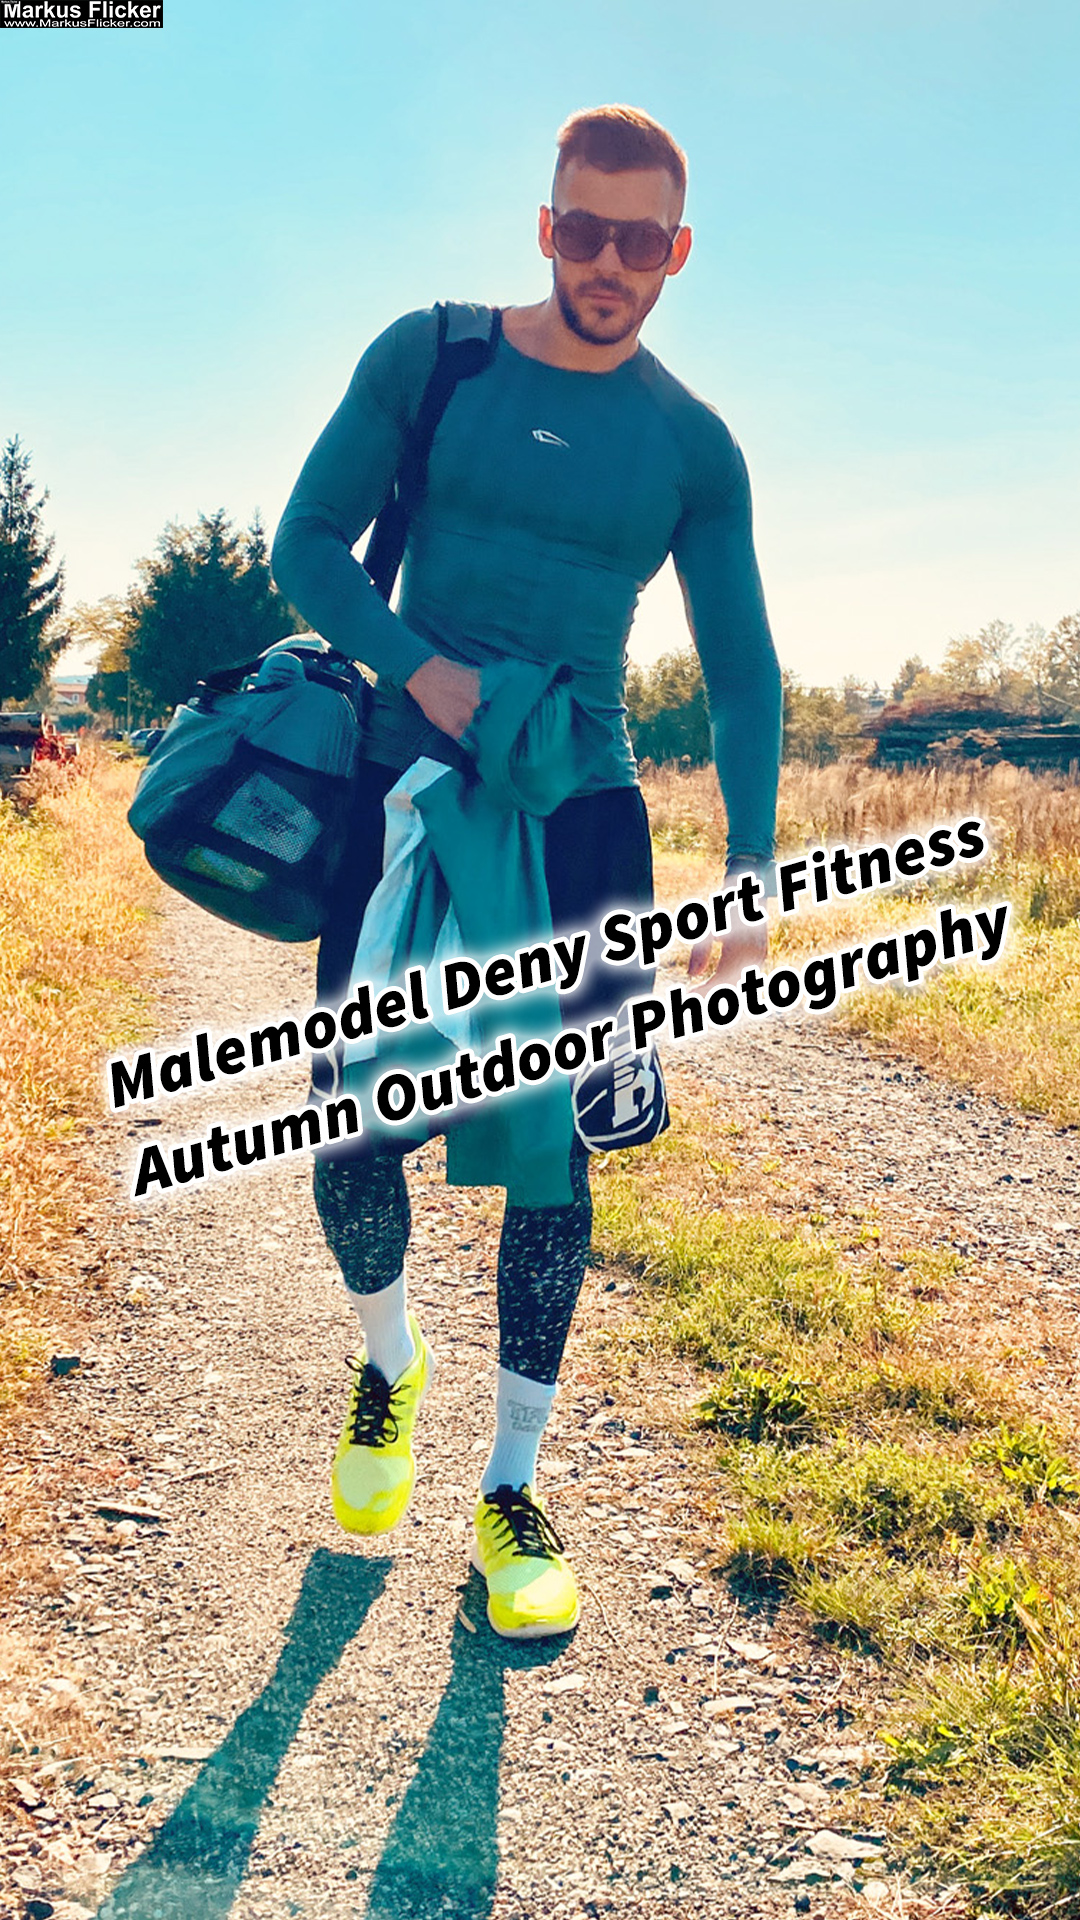 Malemodel Deny Sport Fitness Autumn Outdoor Photography